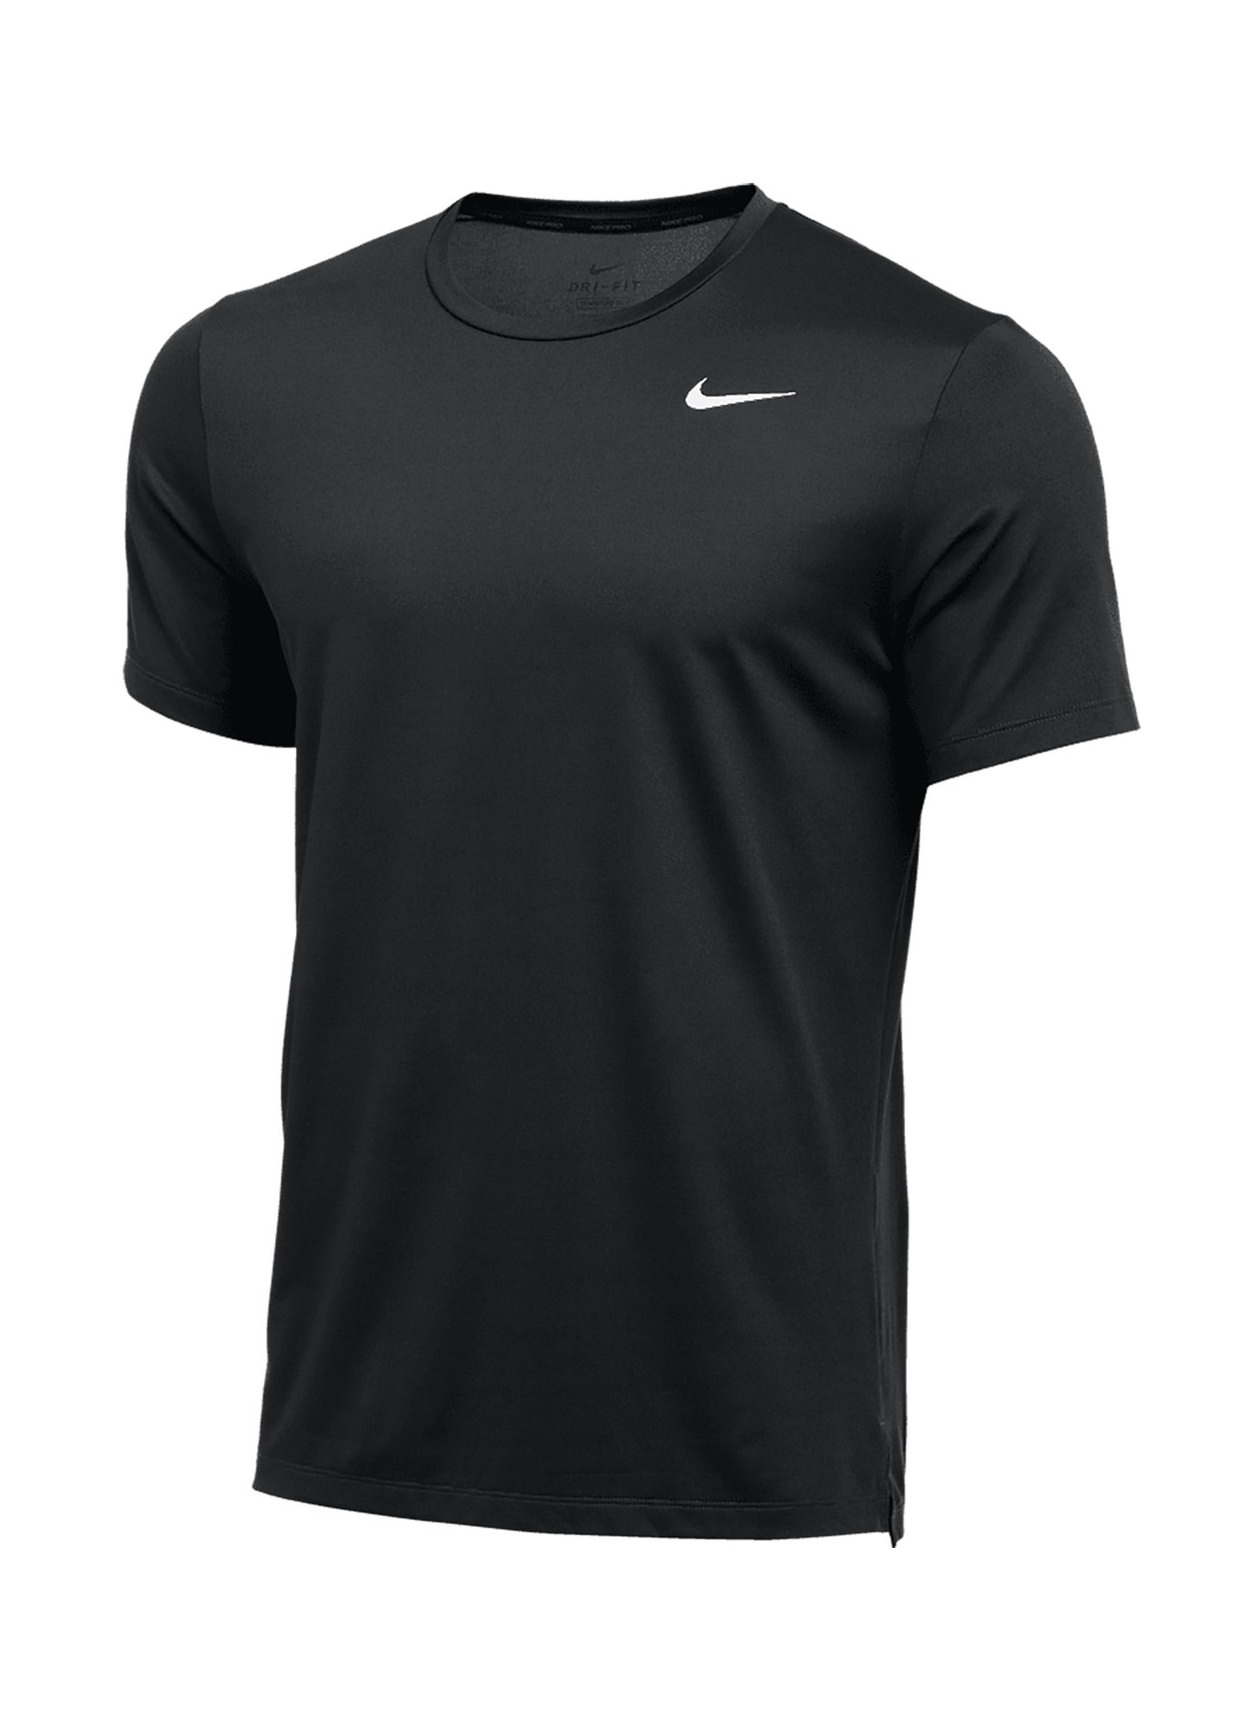 Nike Men's Team Black / Heather Dri-FIT Training T-Shirt